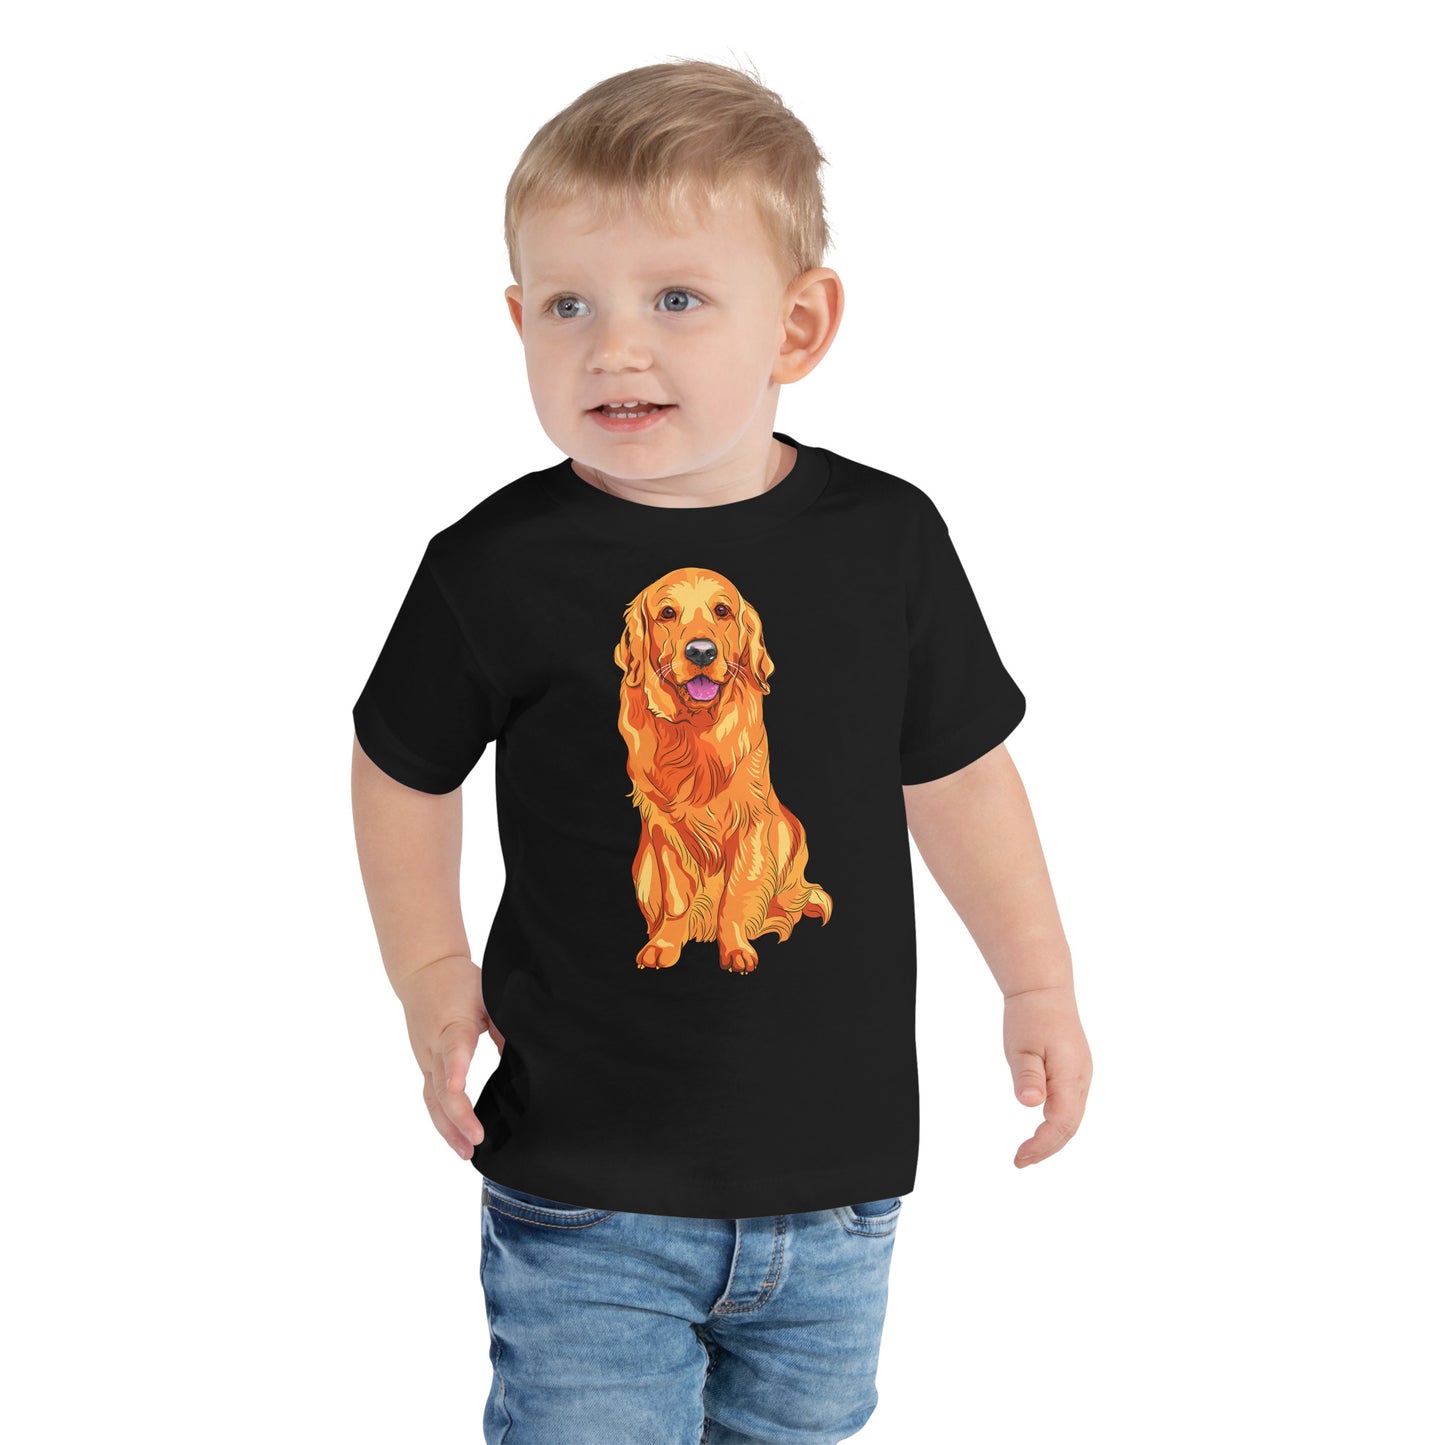 Cool Golden Retriever Dog T-shirt, No. 0581